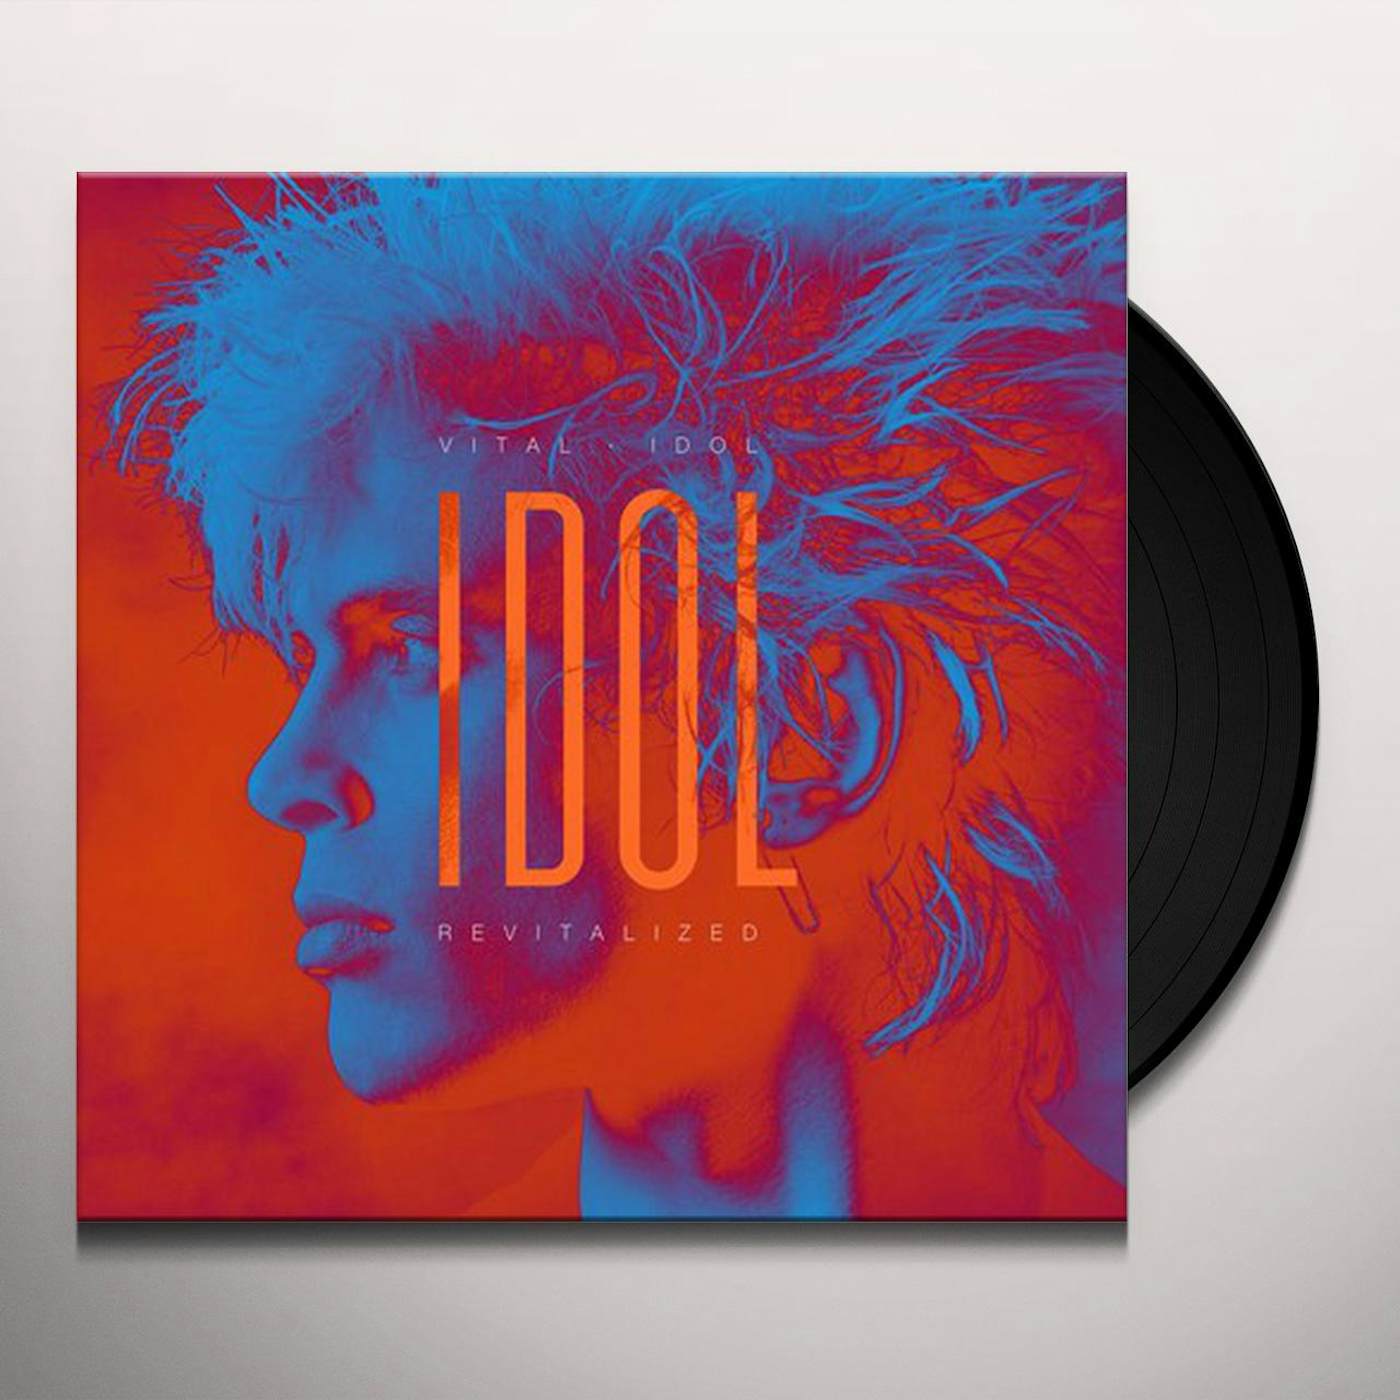 BILLY IDOL - VITAL IDOL: REVITALIZED (REMIXES) (2LP/180G) Vinyl Record